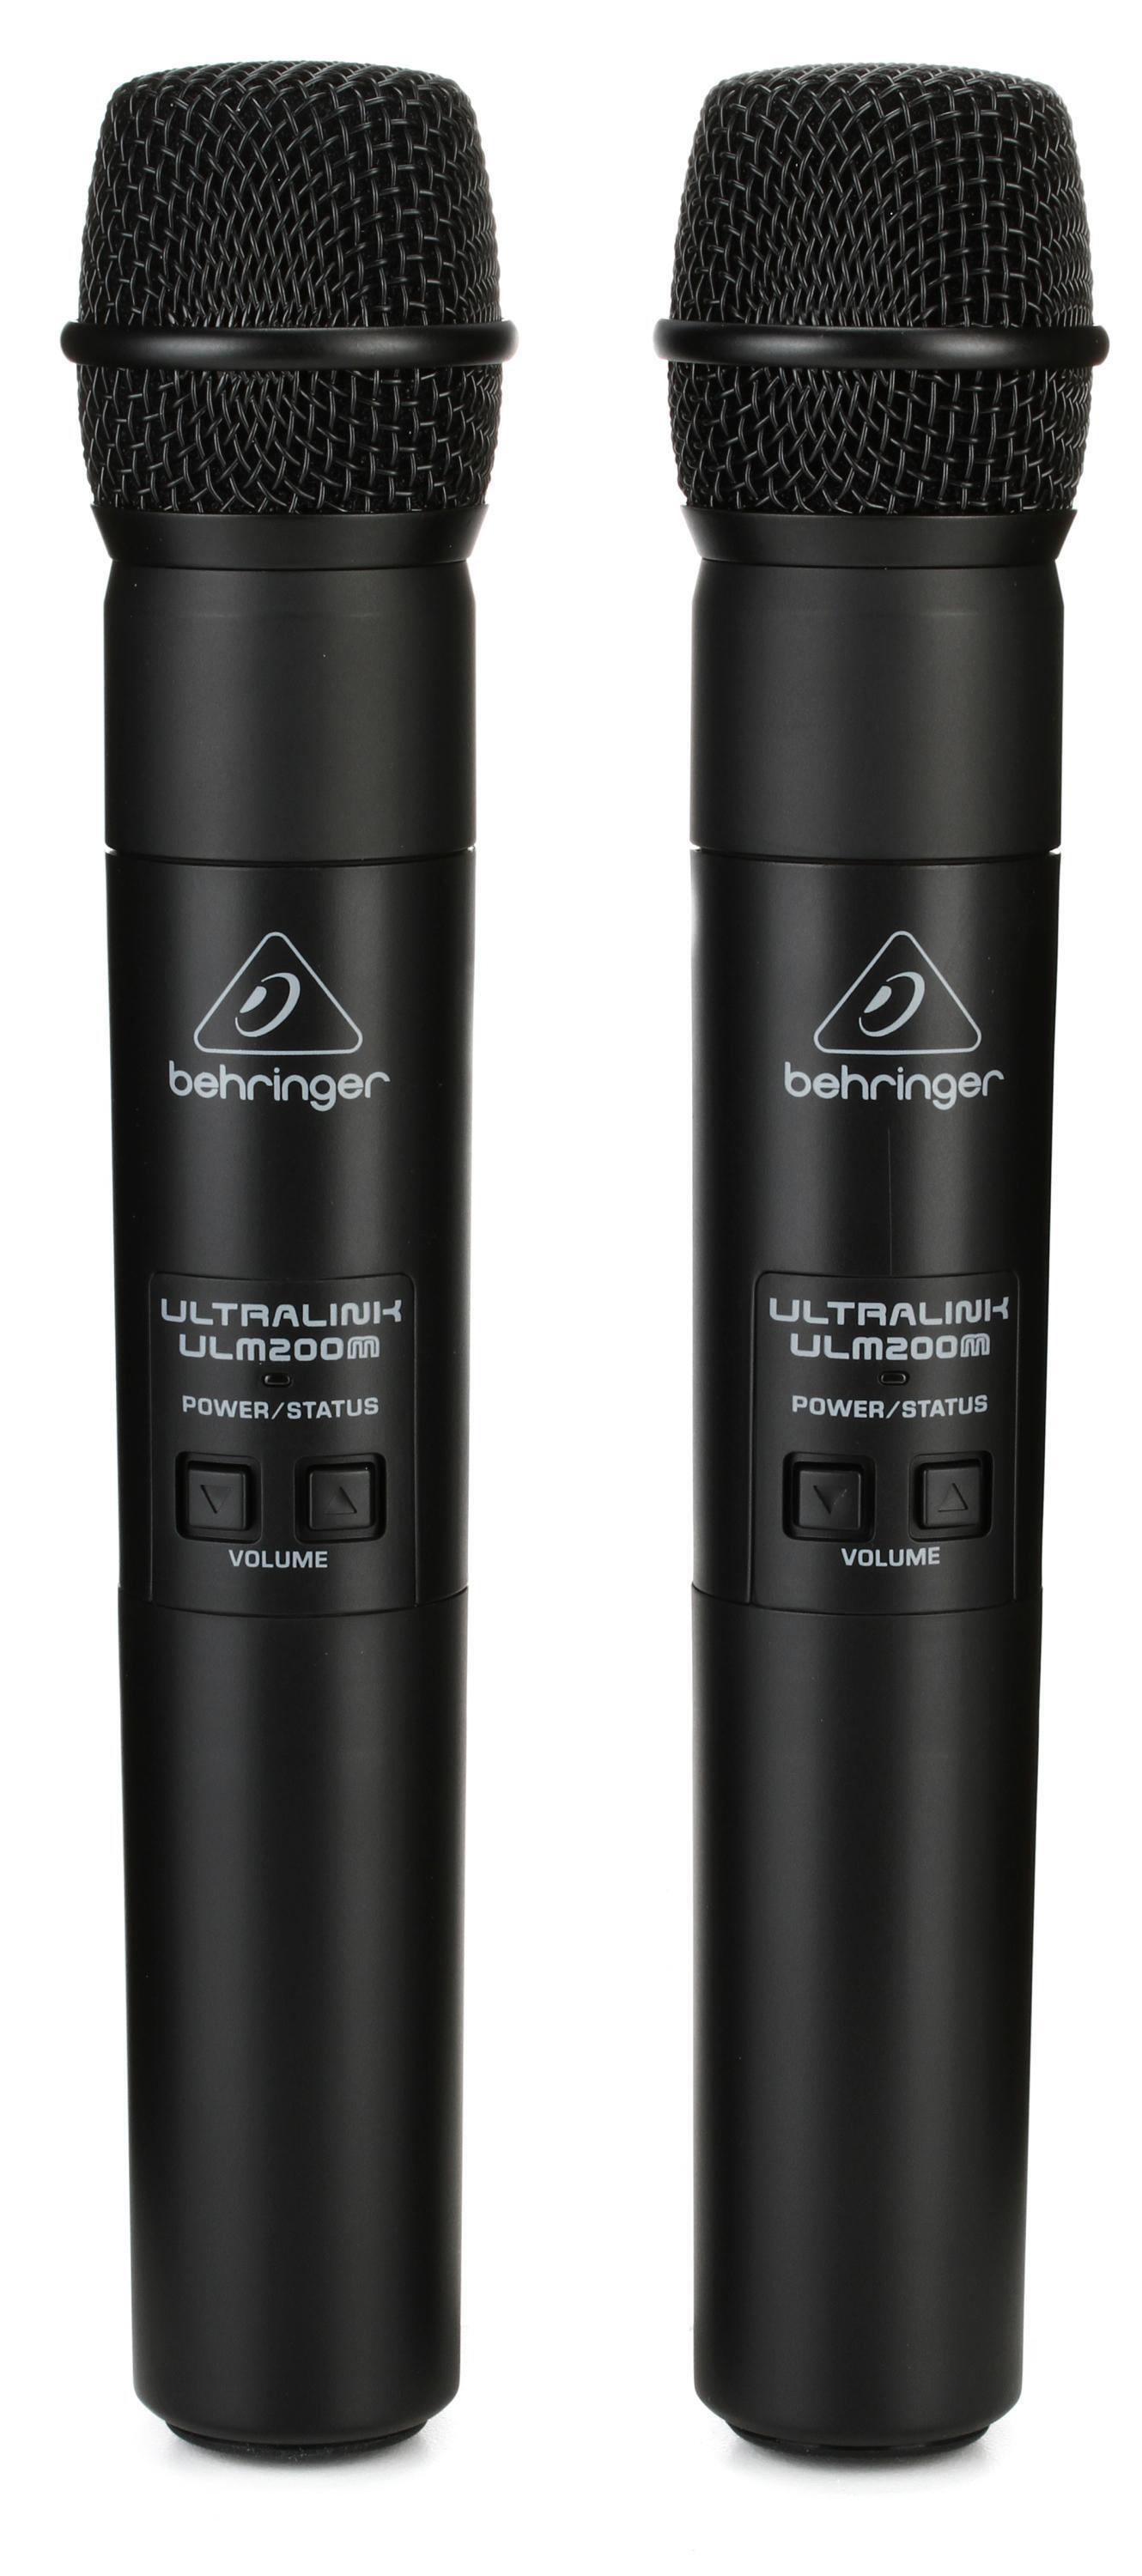 Bundled Item: Behringer Ultralink ULM202USB Wireless USB Dual Microphone System